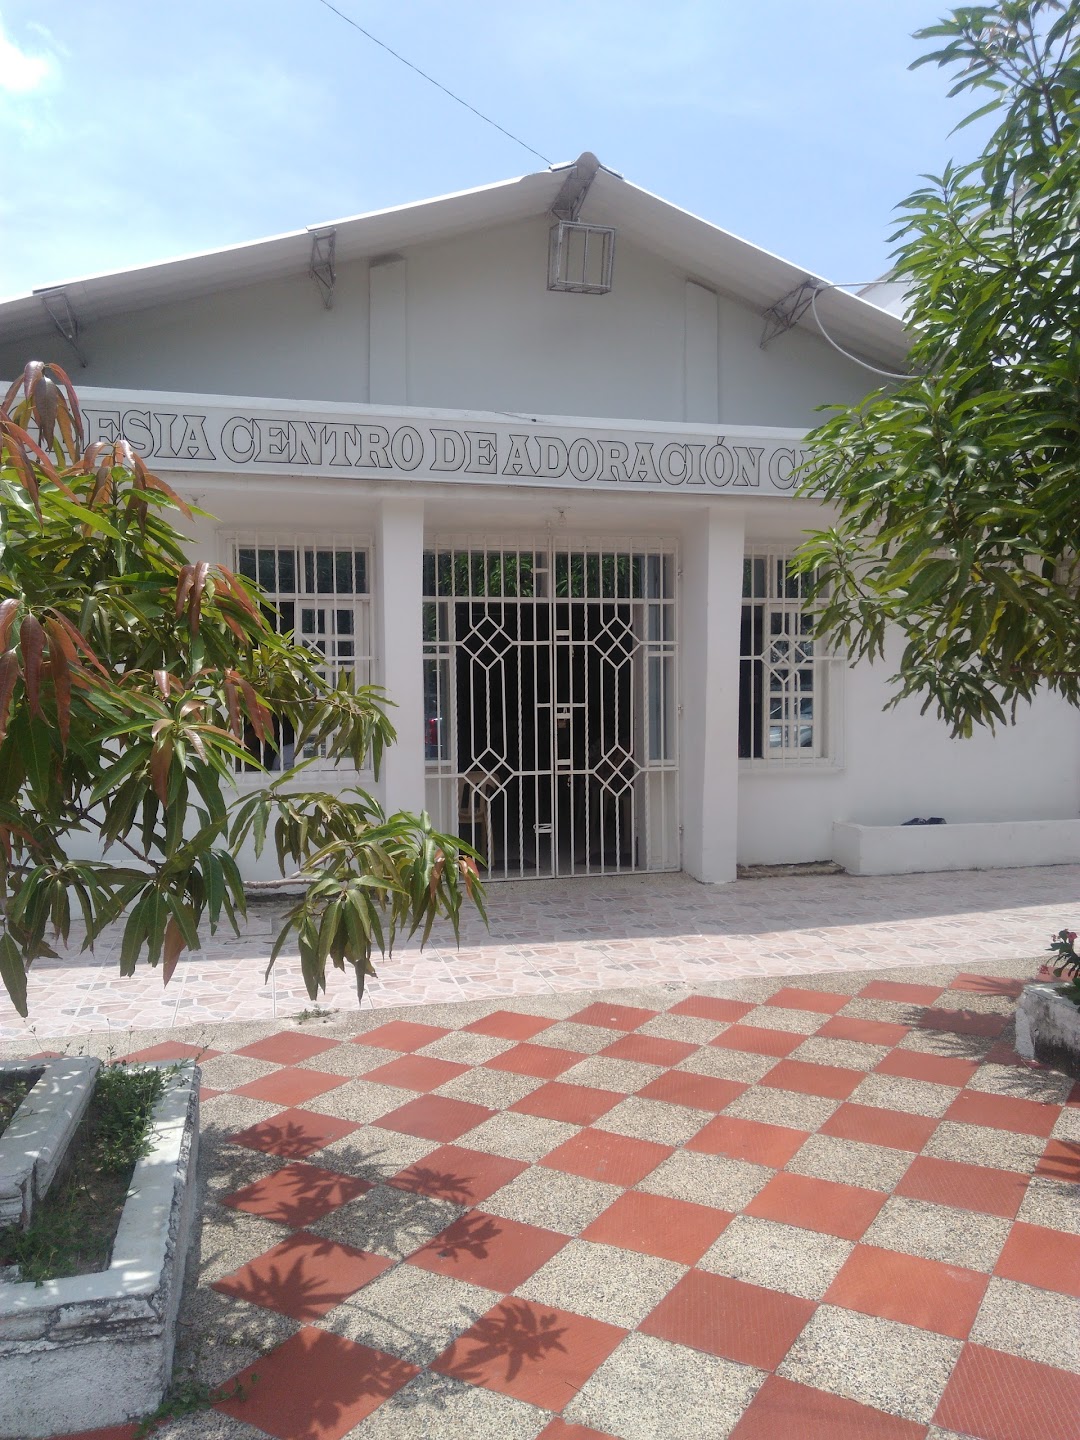 Iglesia Bautista Centro De Adoracion Casa De Jehova